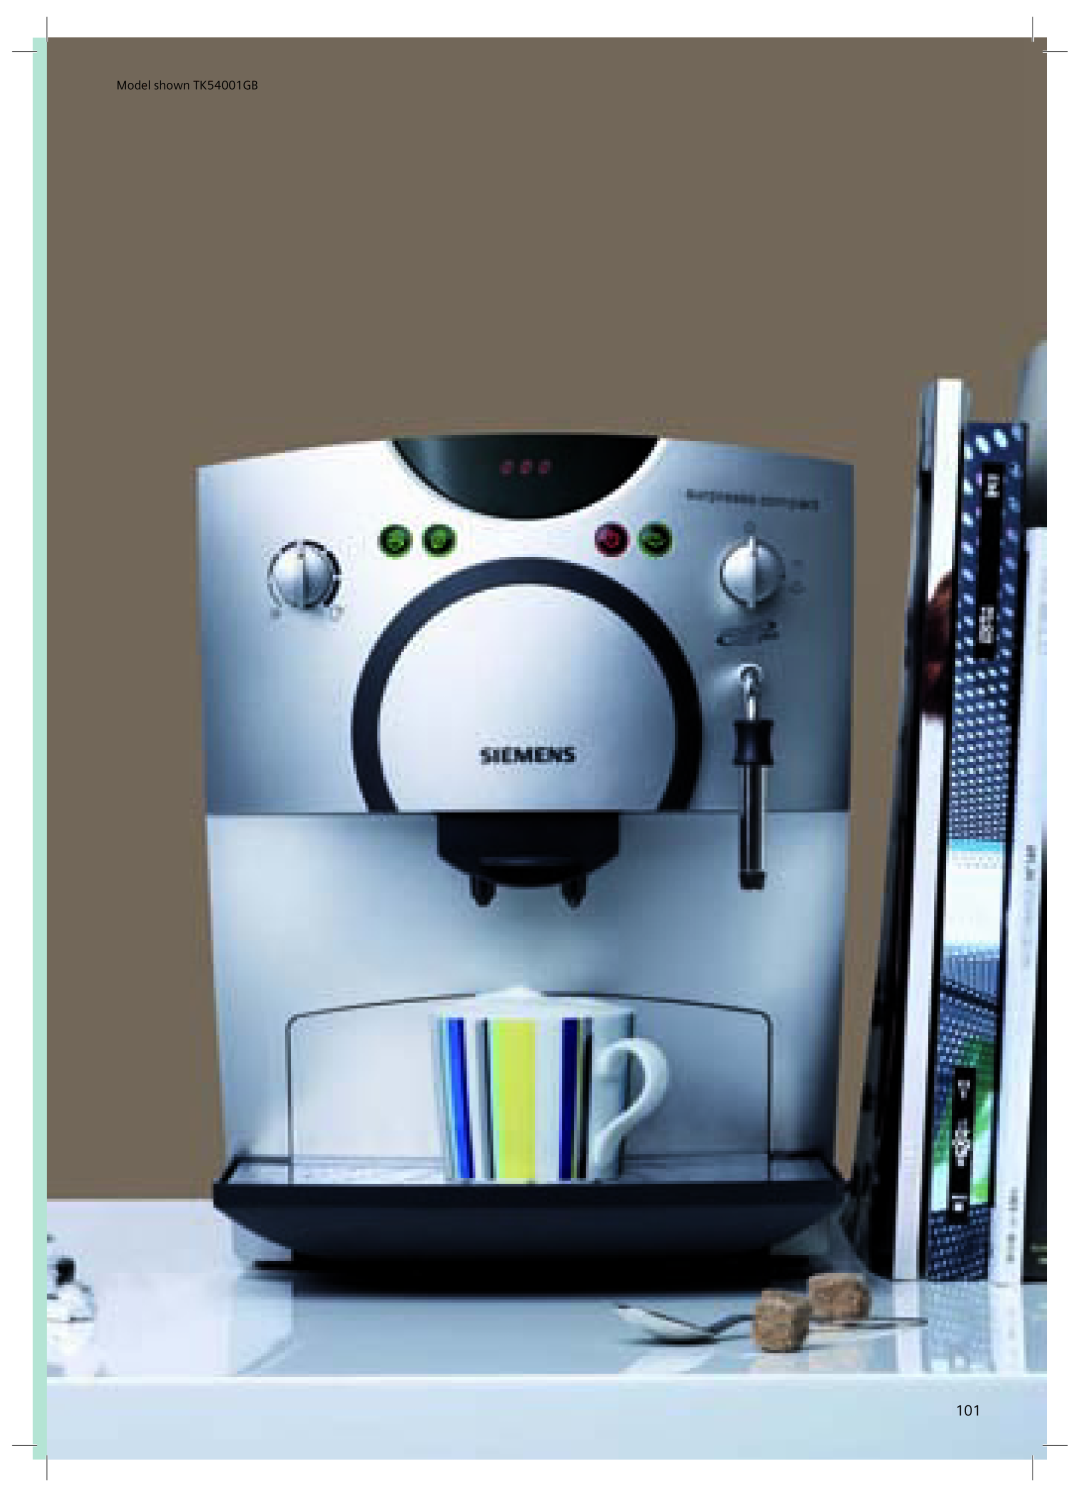 Nespresso TK911N2GB, TK70N01GB, TK50N01GB, TK30N01GB manual Model shown TK54001GB 